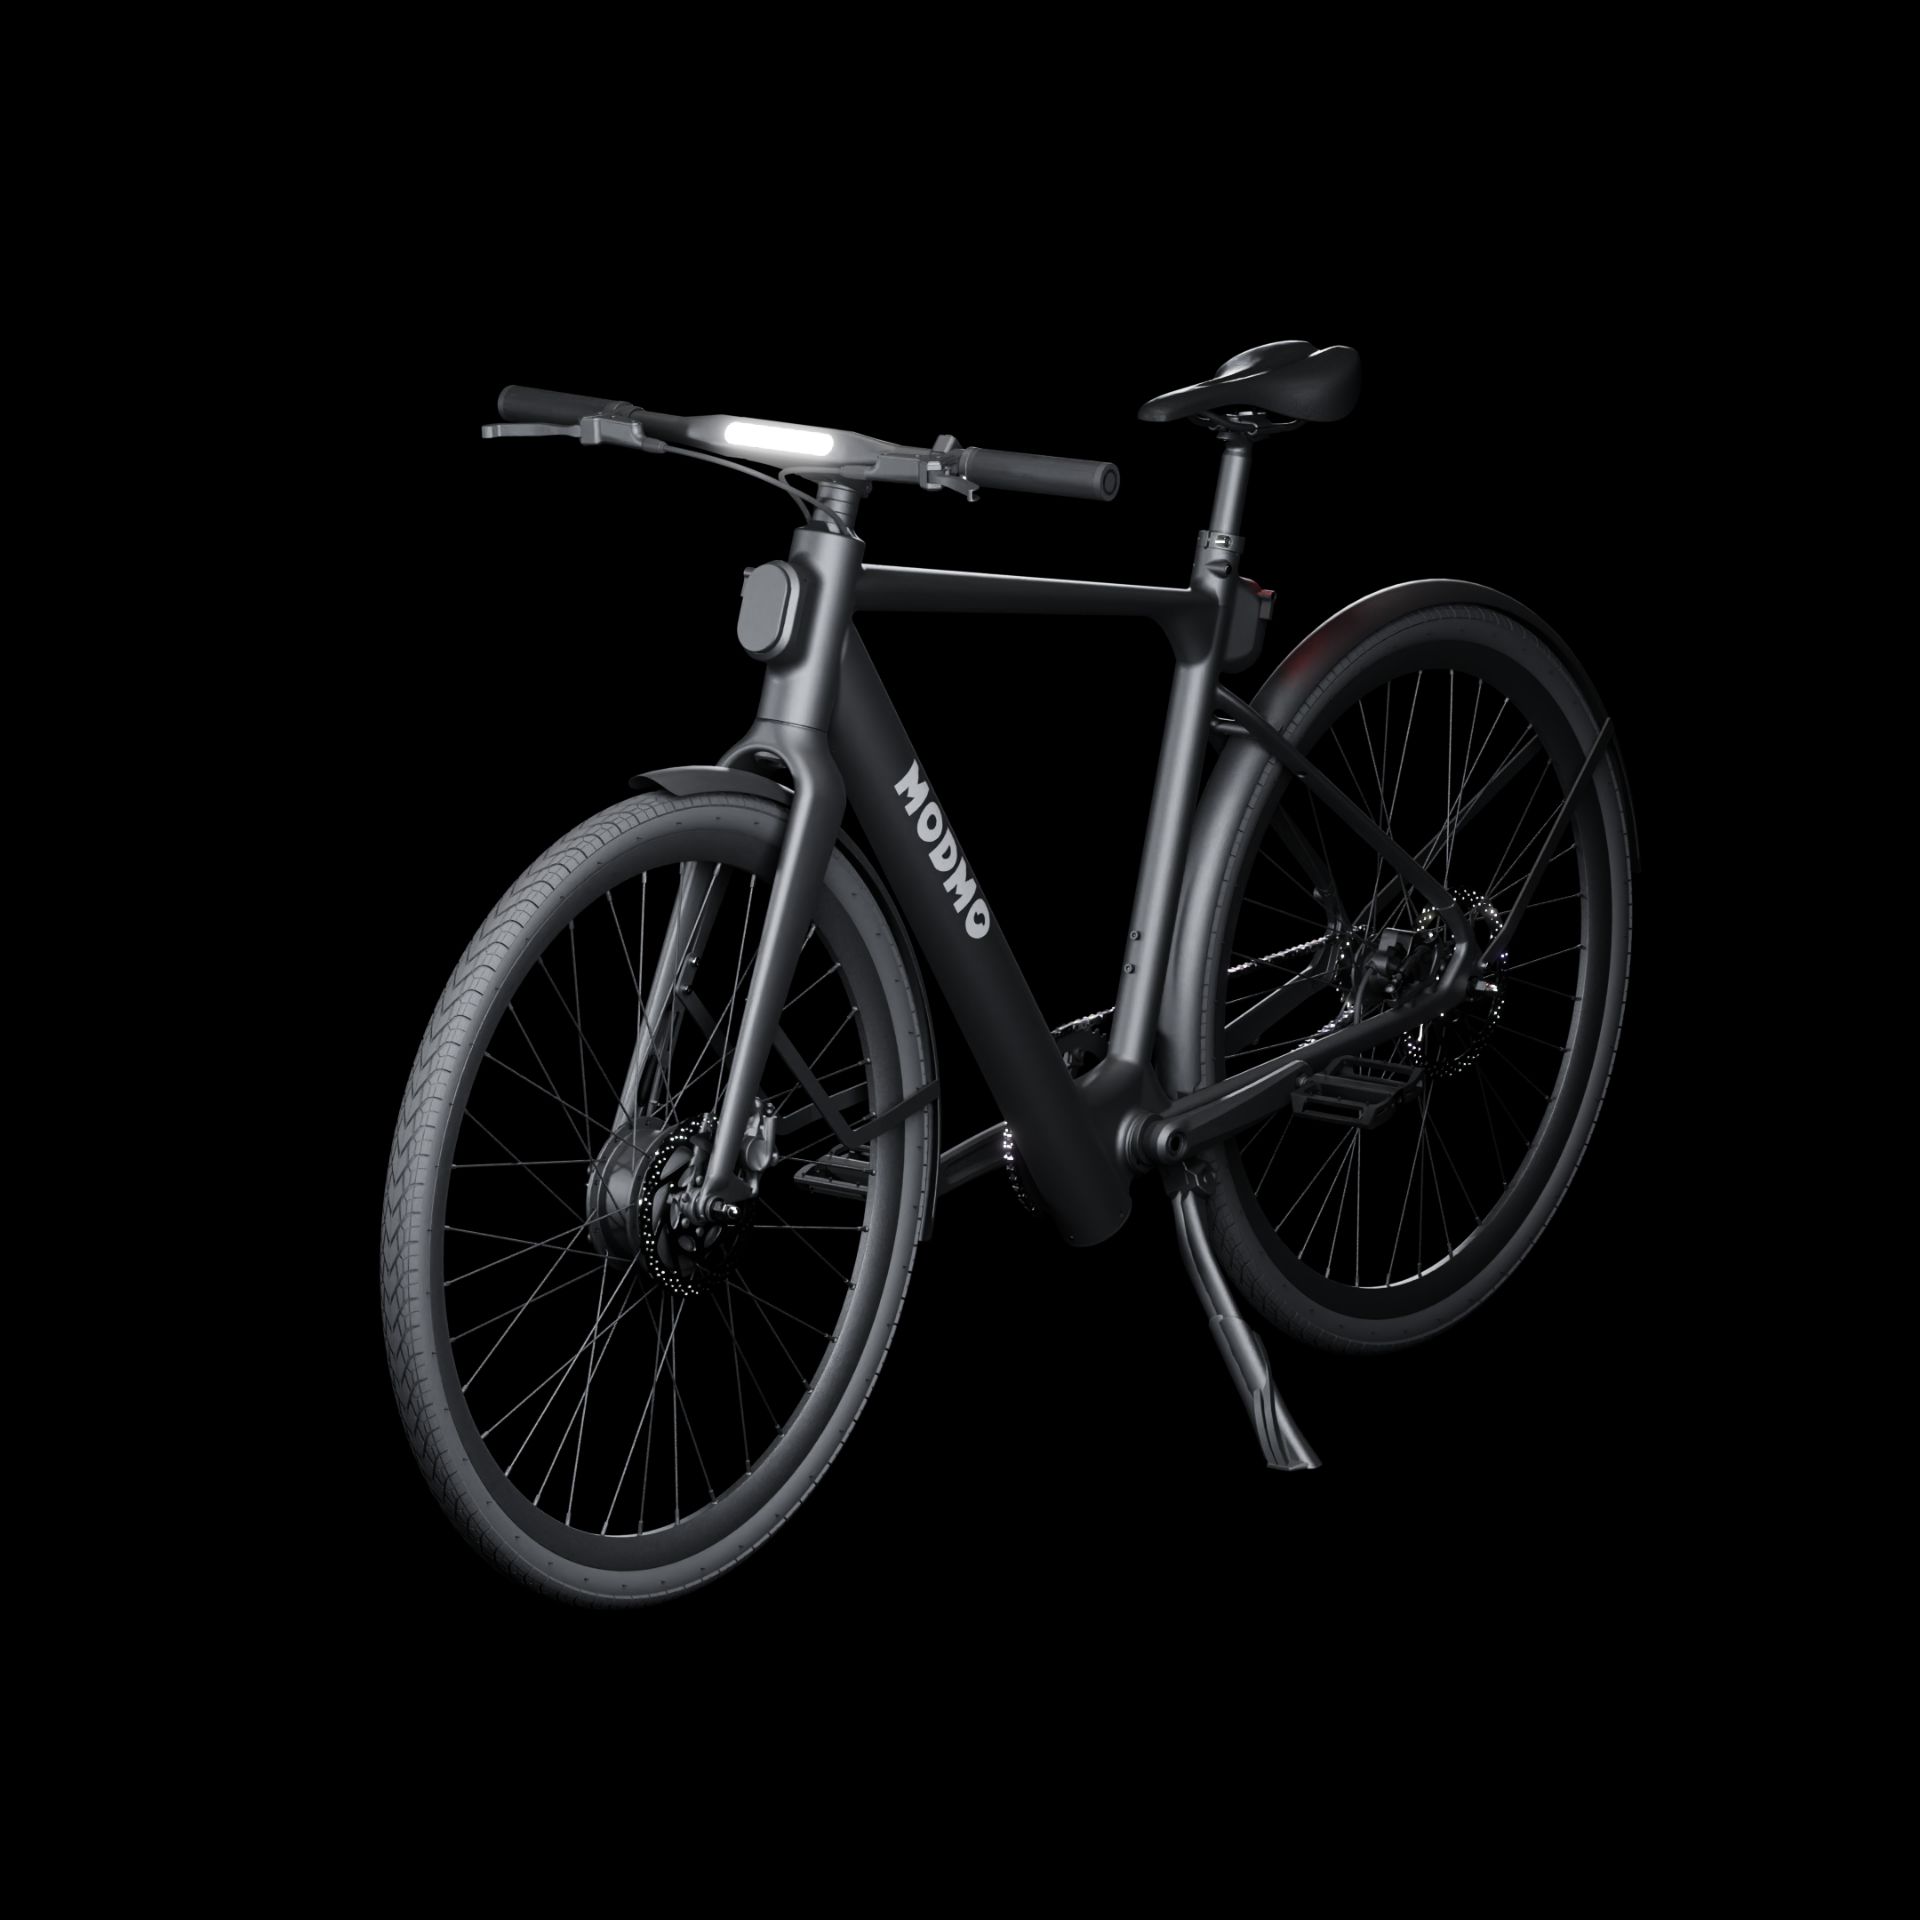 Modmo Saigon+ Electric Bicycle - RRP £2800 - Size M (Rider: 155-175cm) - Image 10 of 15